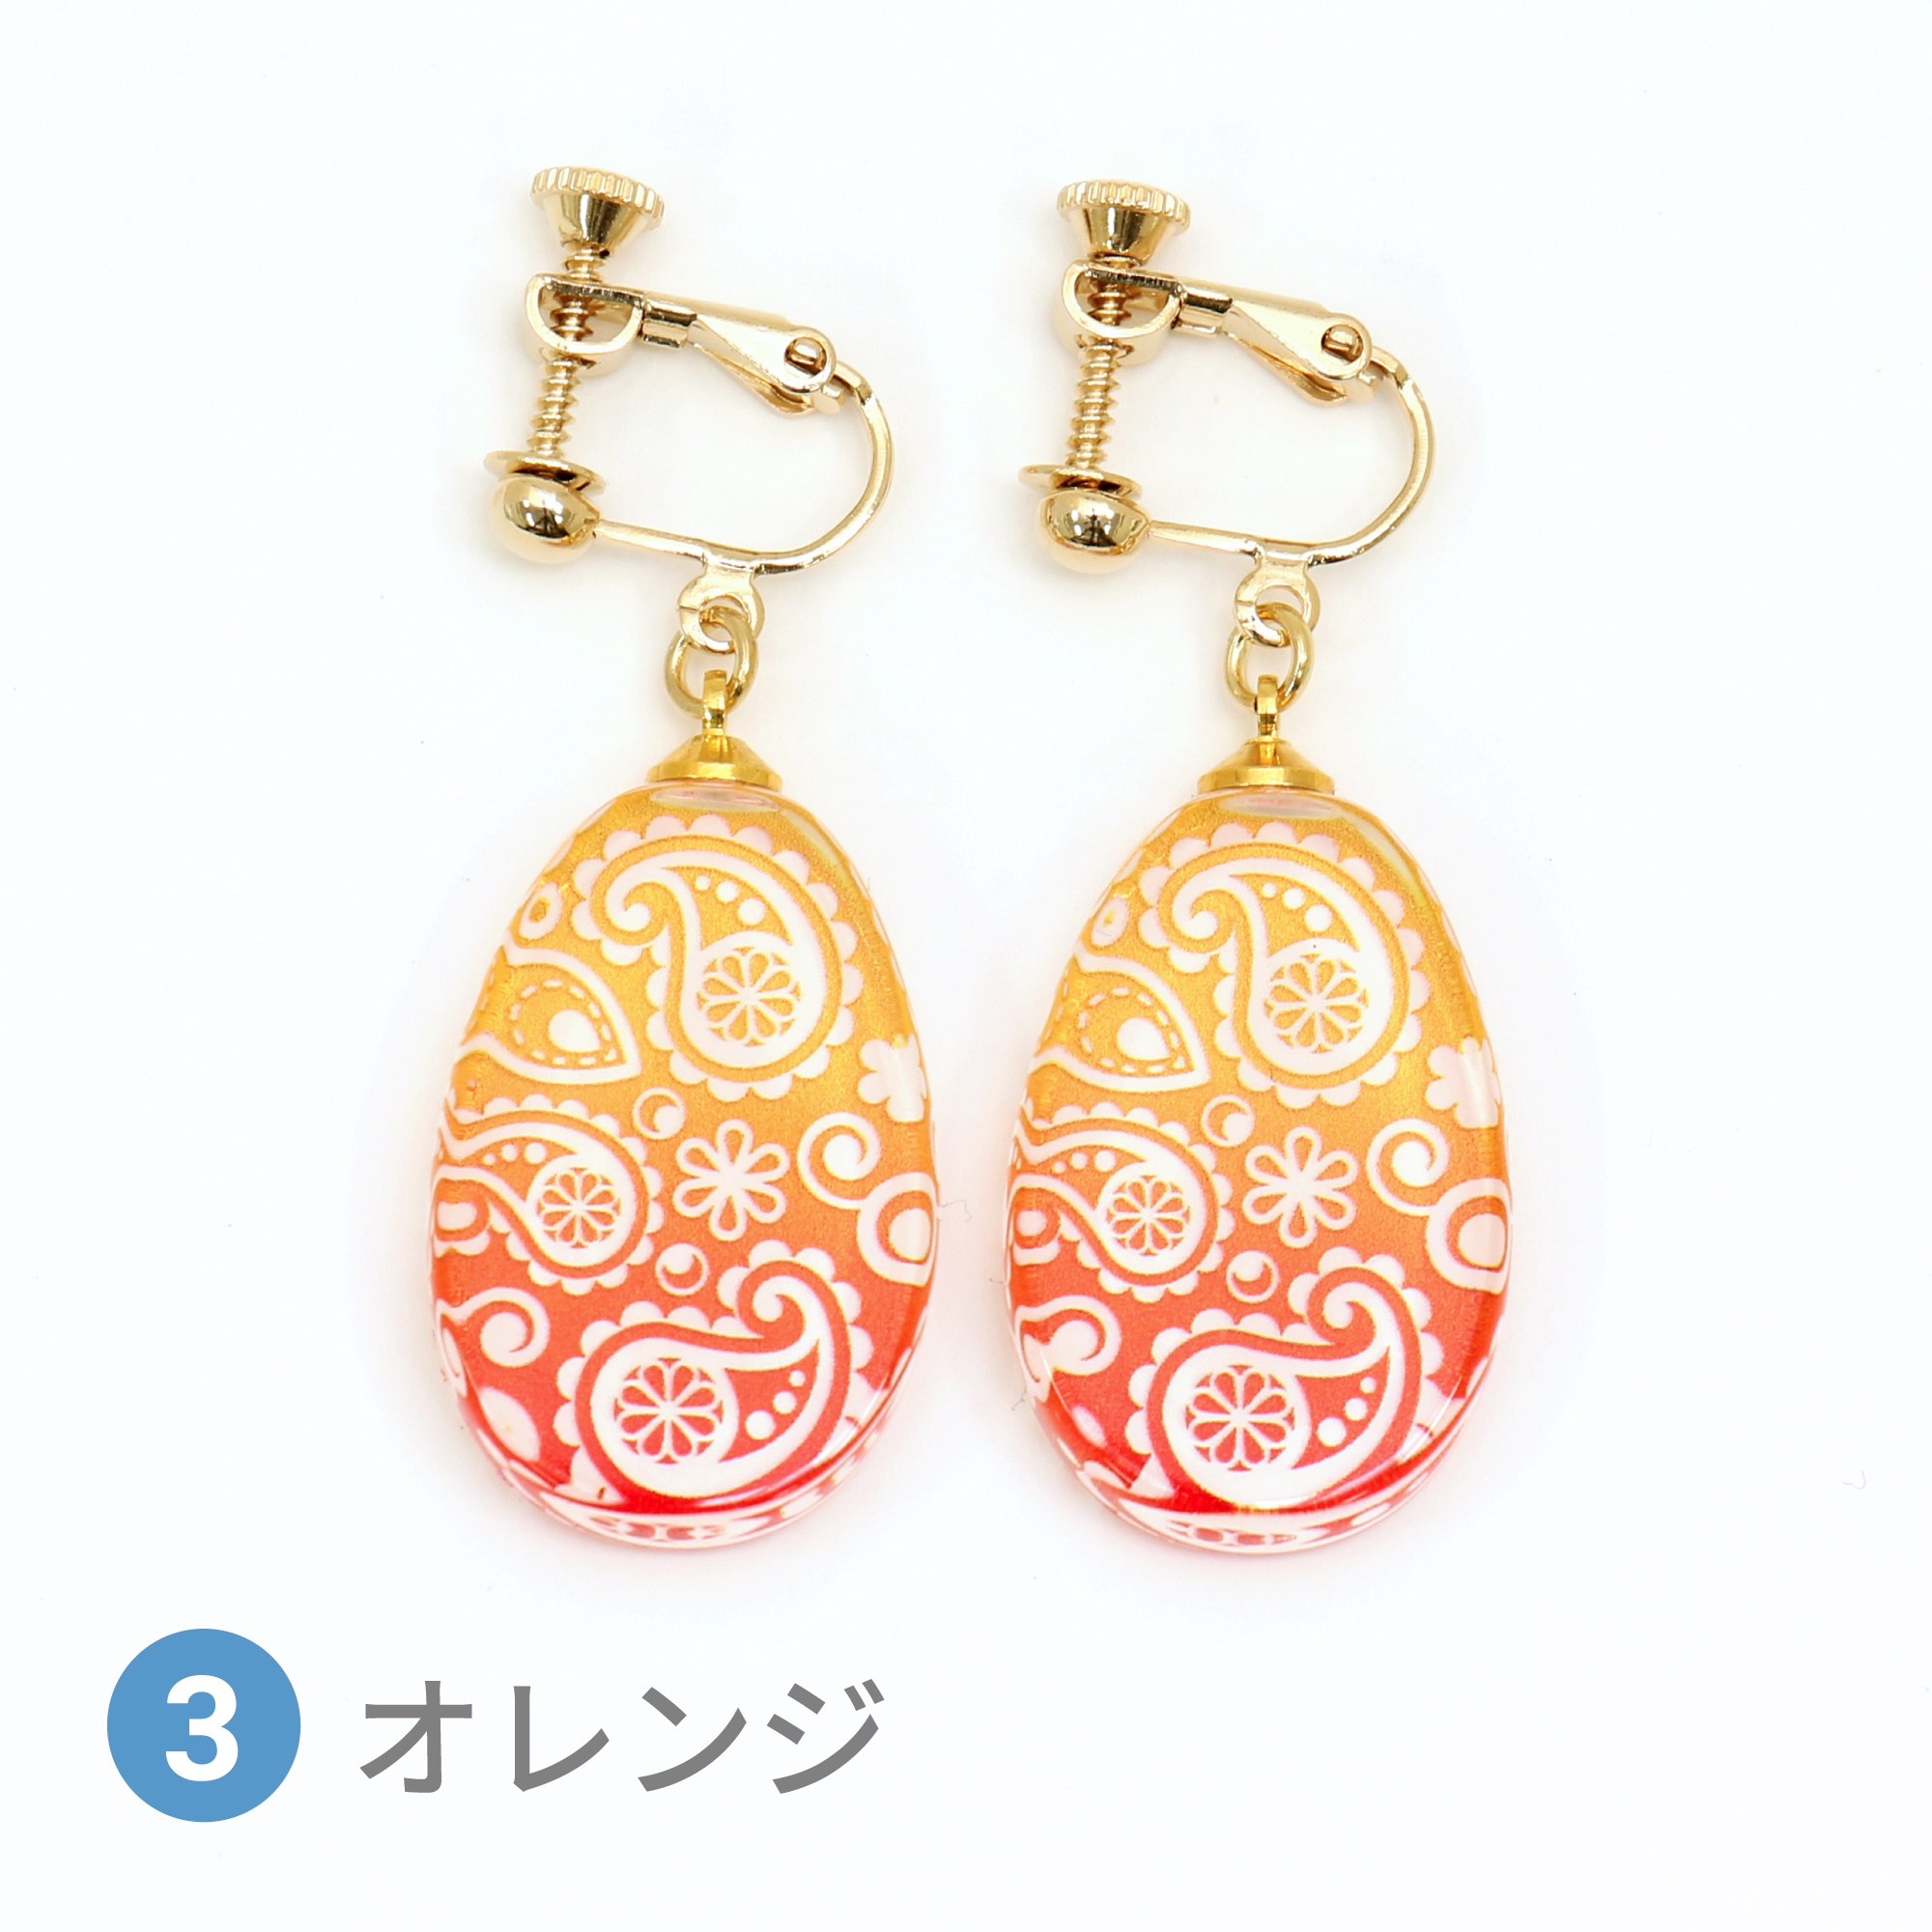 Glass accessories Earring PAISLEY orange drop shape